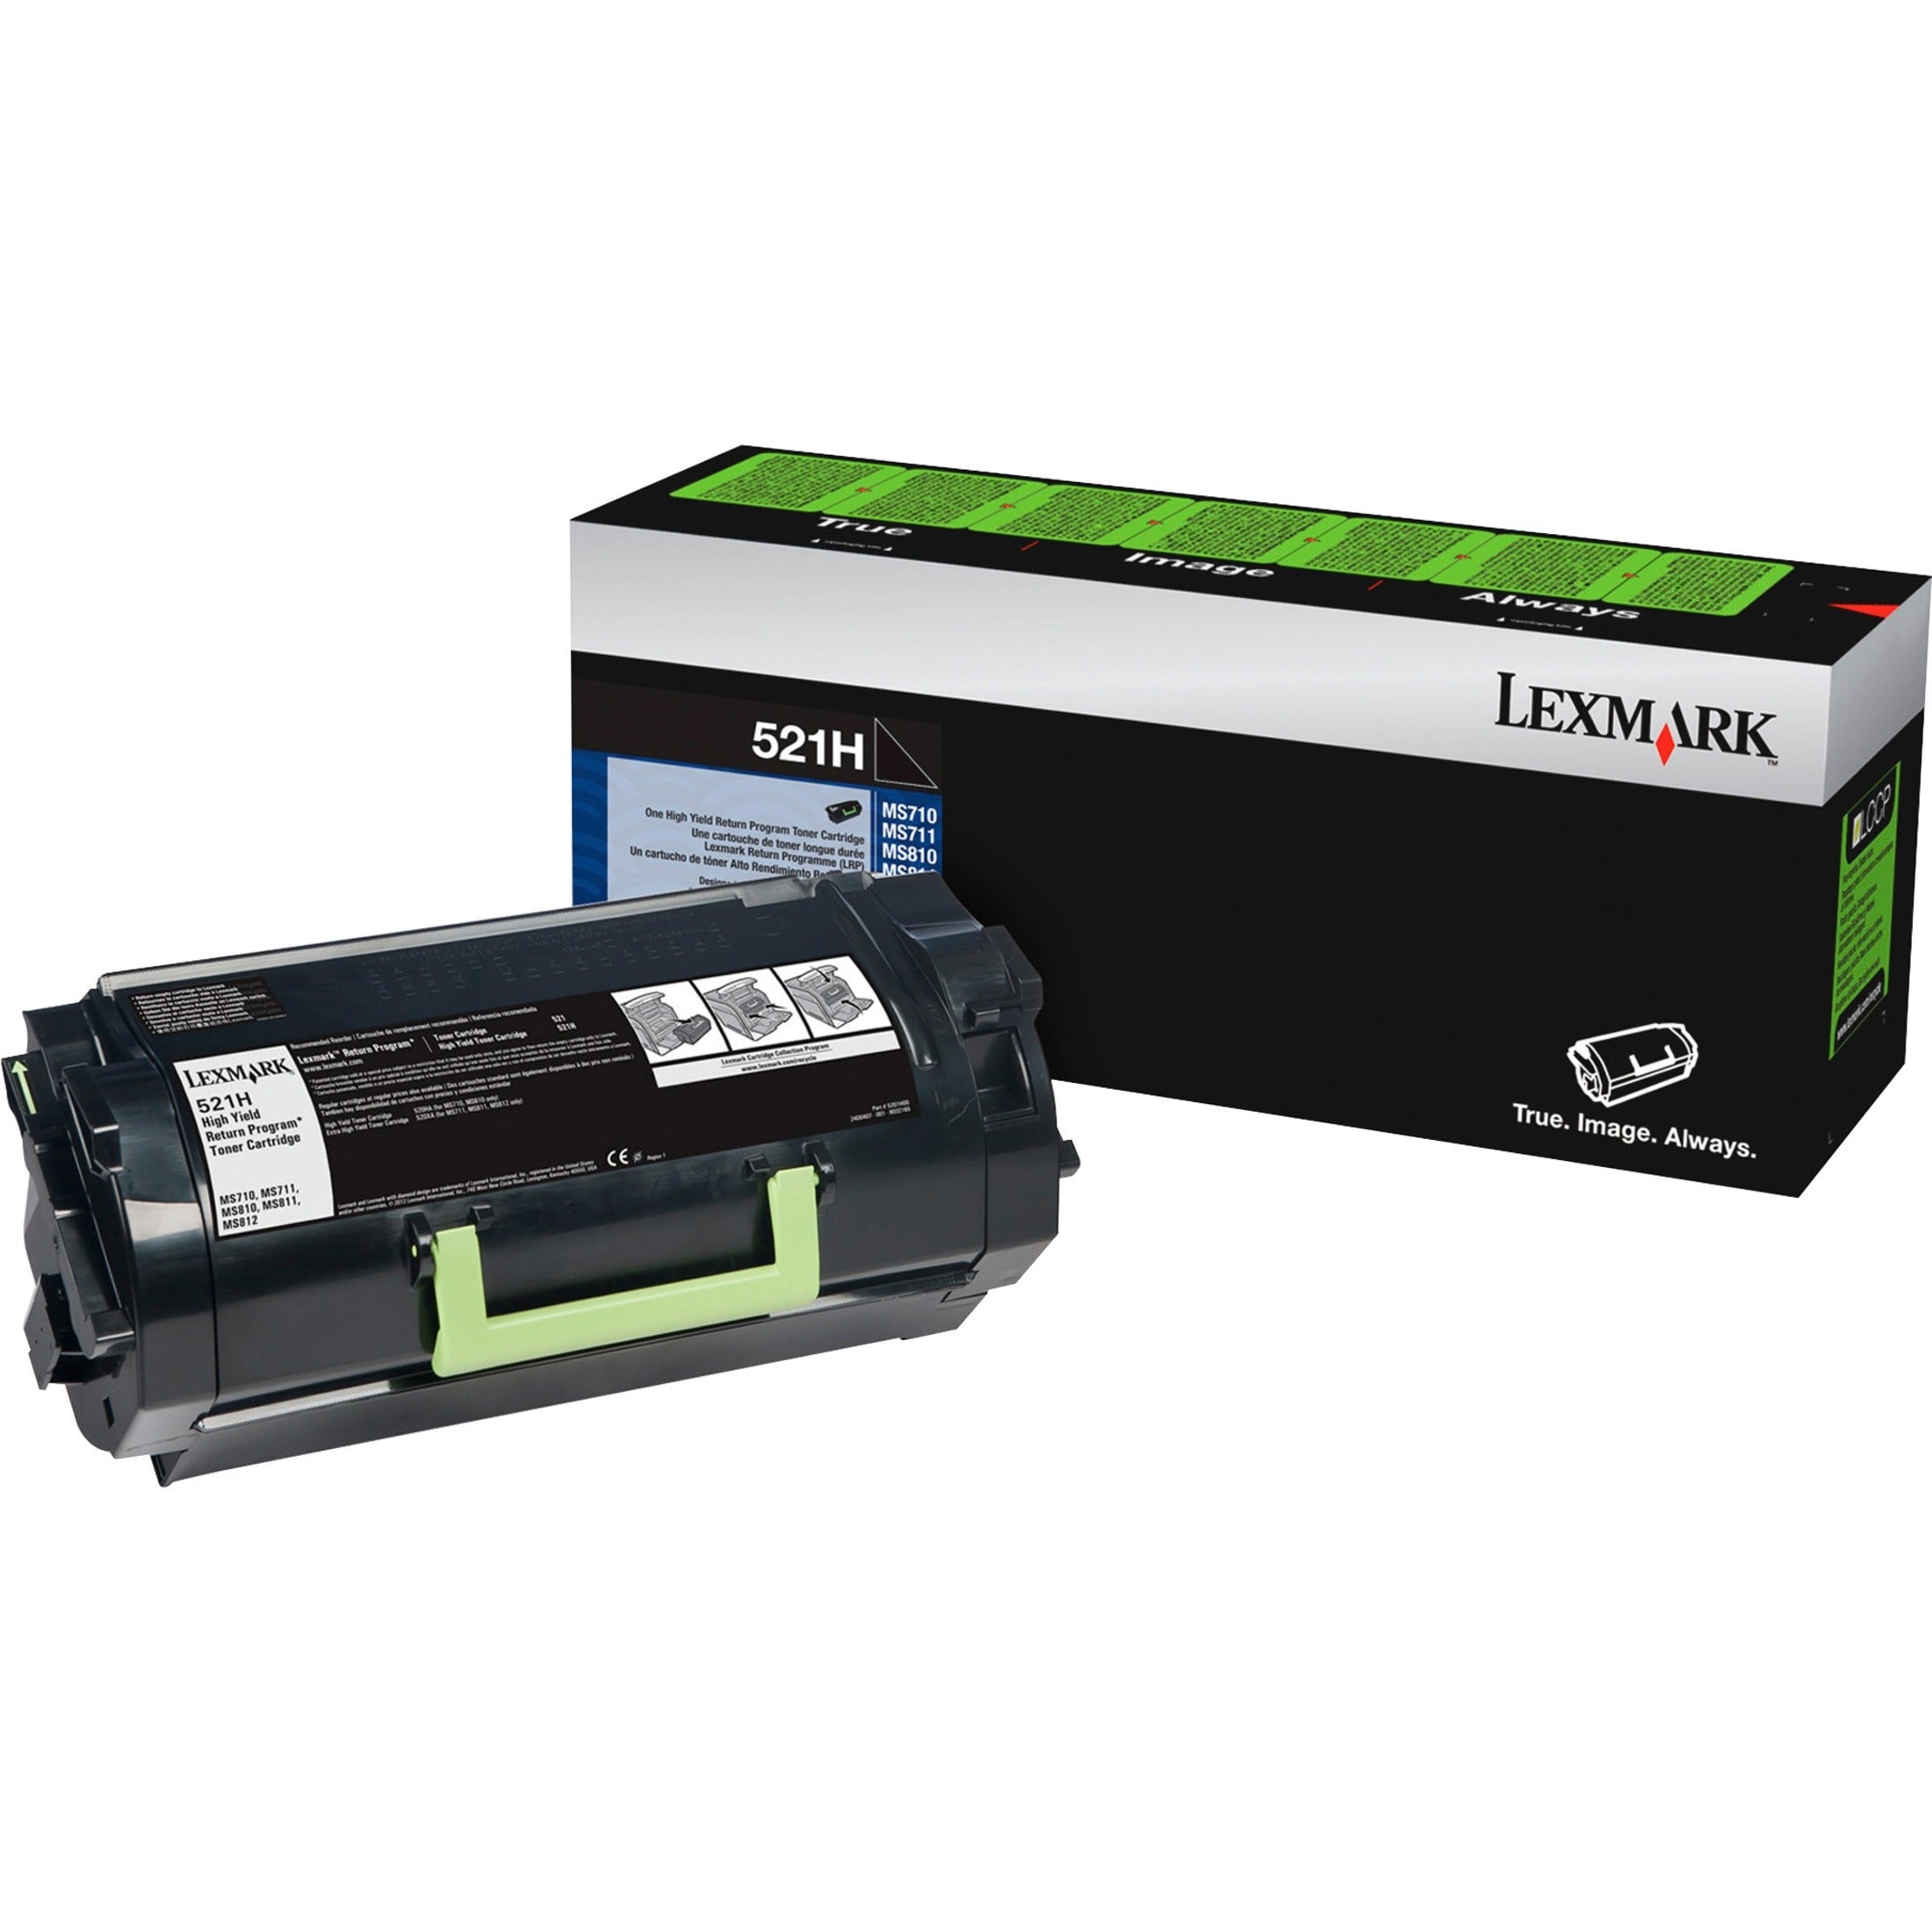 Lexmark 52D1H00 Unison 521H Toner Cartridge, High Yield, Black, 25,000 Pages